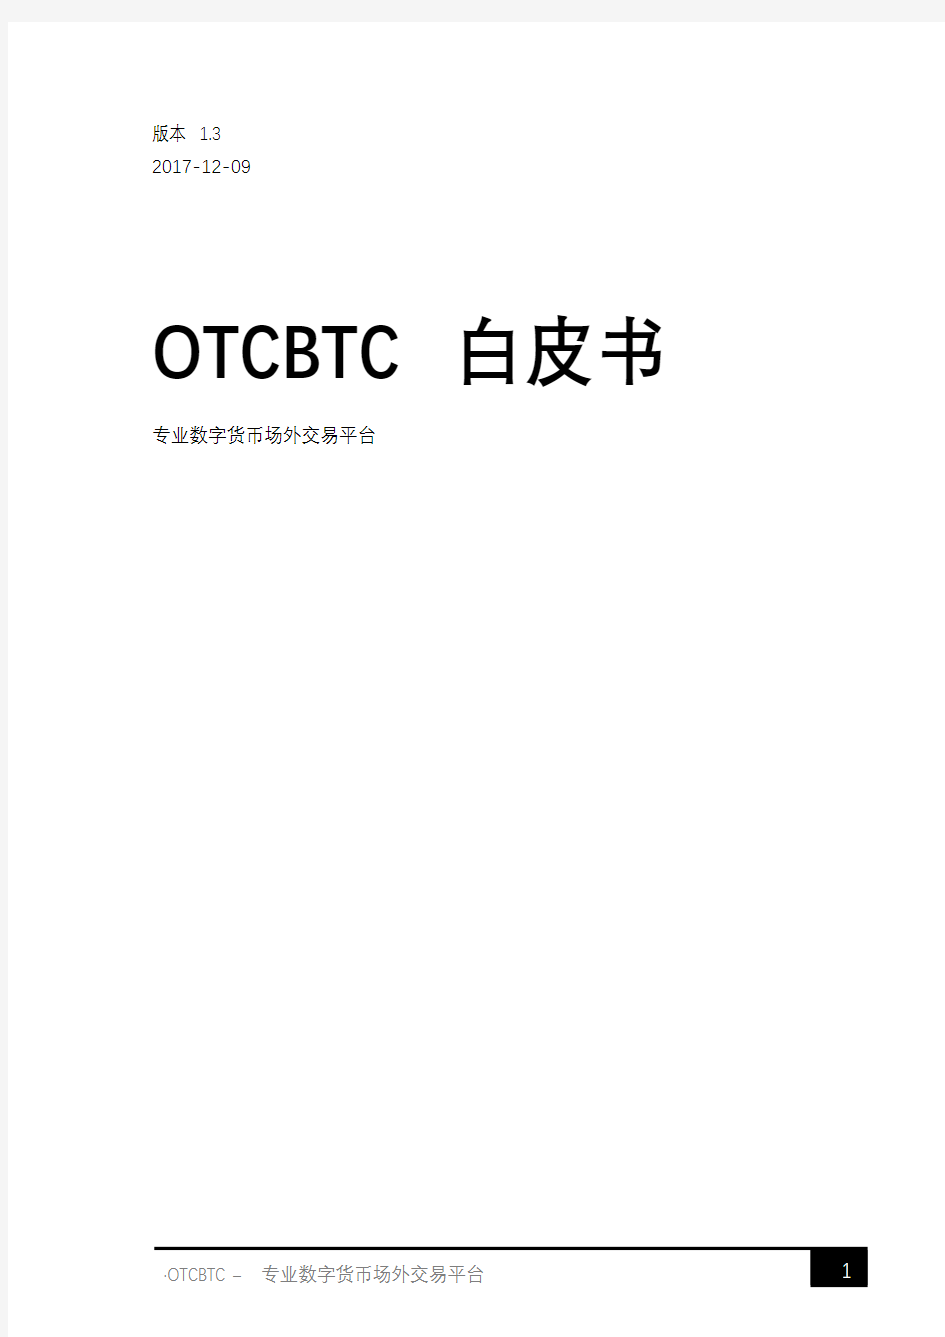 OTCBTC(交易平台) 白皮书 2017-12-09 v1.3